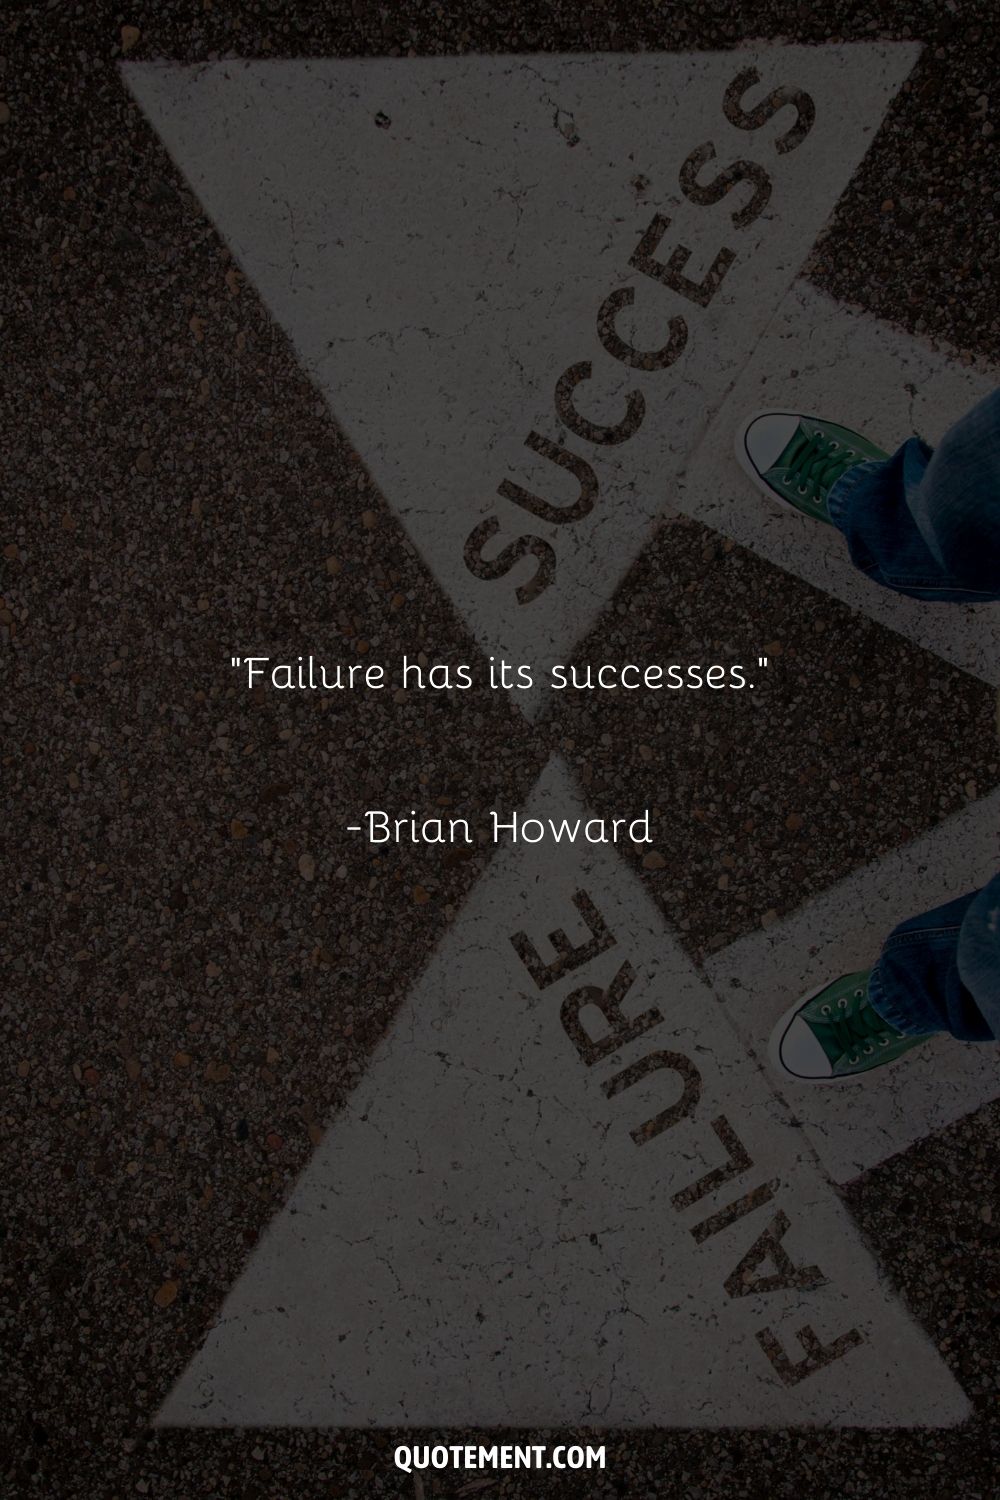 “Failure has its successes.” ― Brian Howard